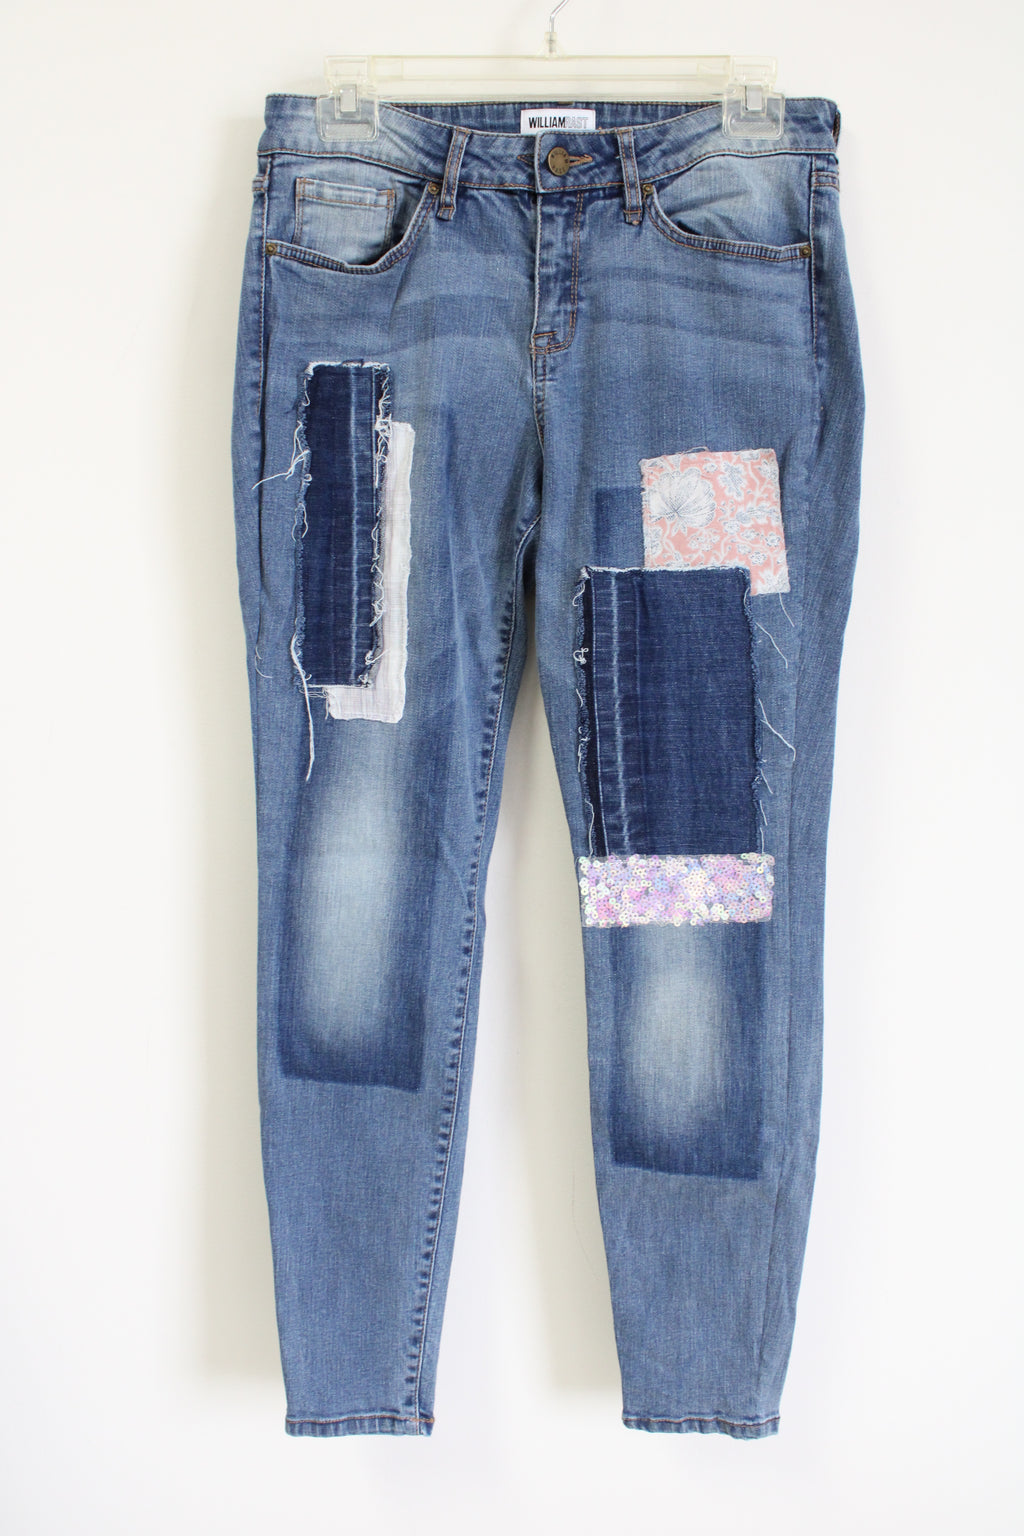 Willian Rast Patchwork Perfect Skinny Jeans | 29